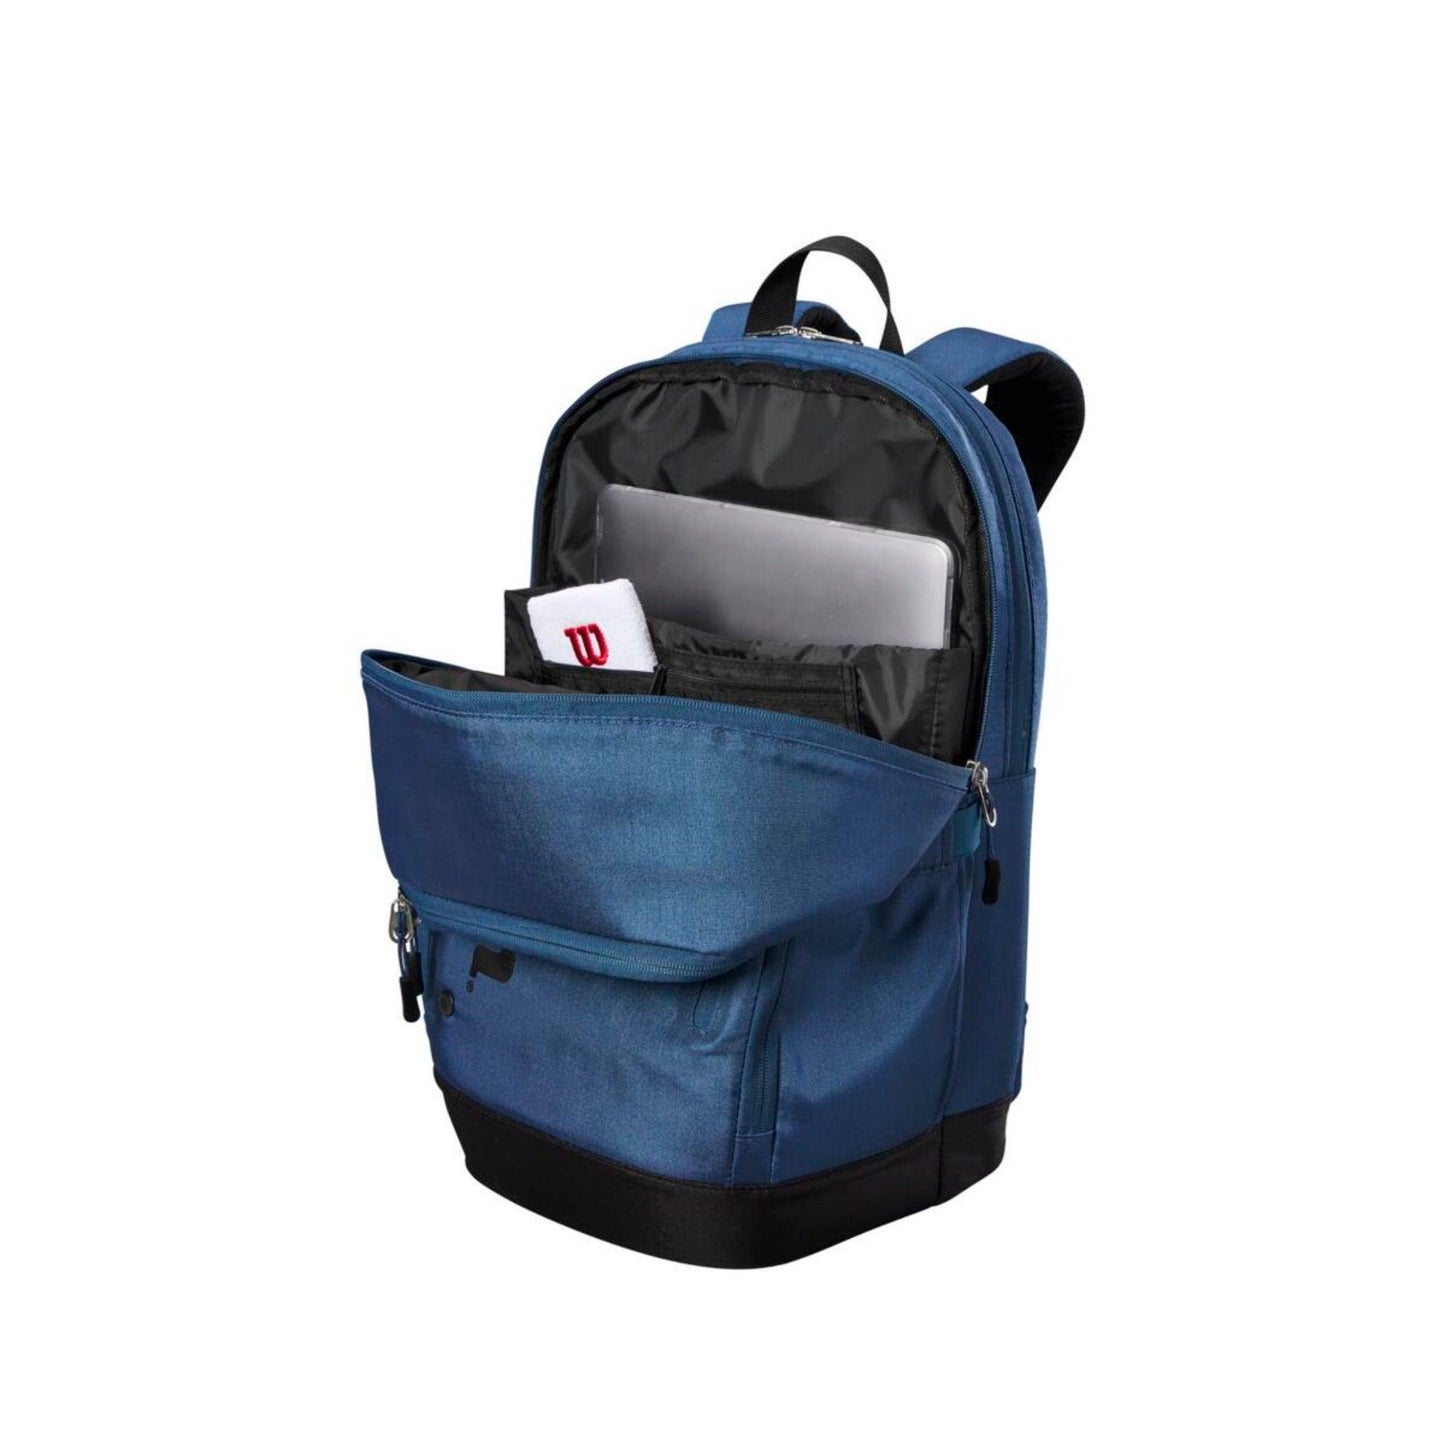 wilson-tour-backpack-ultra-blue-interior